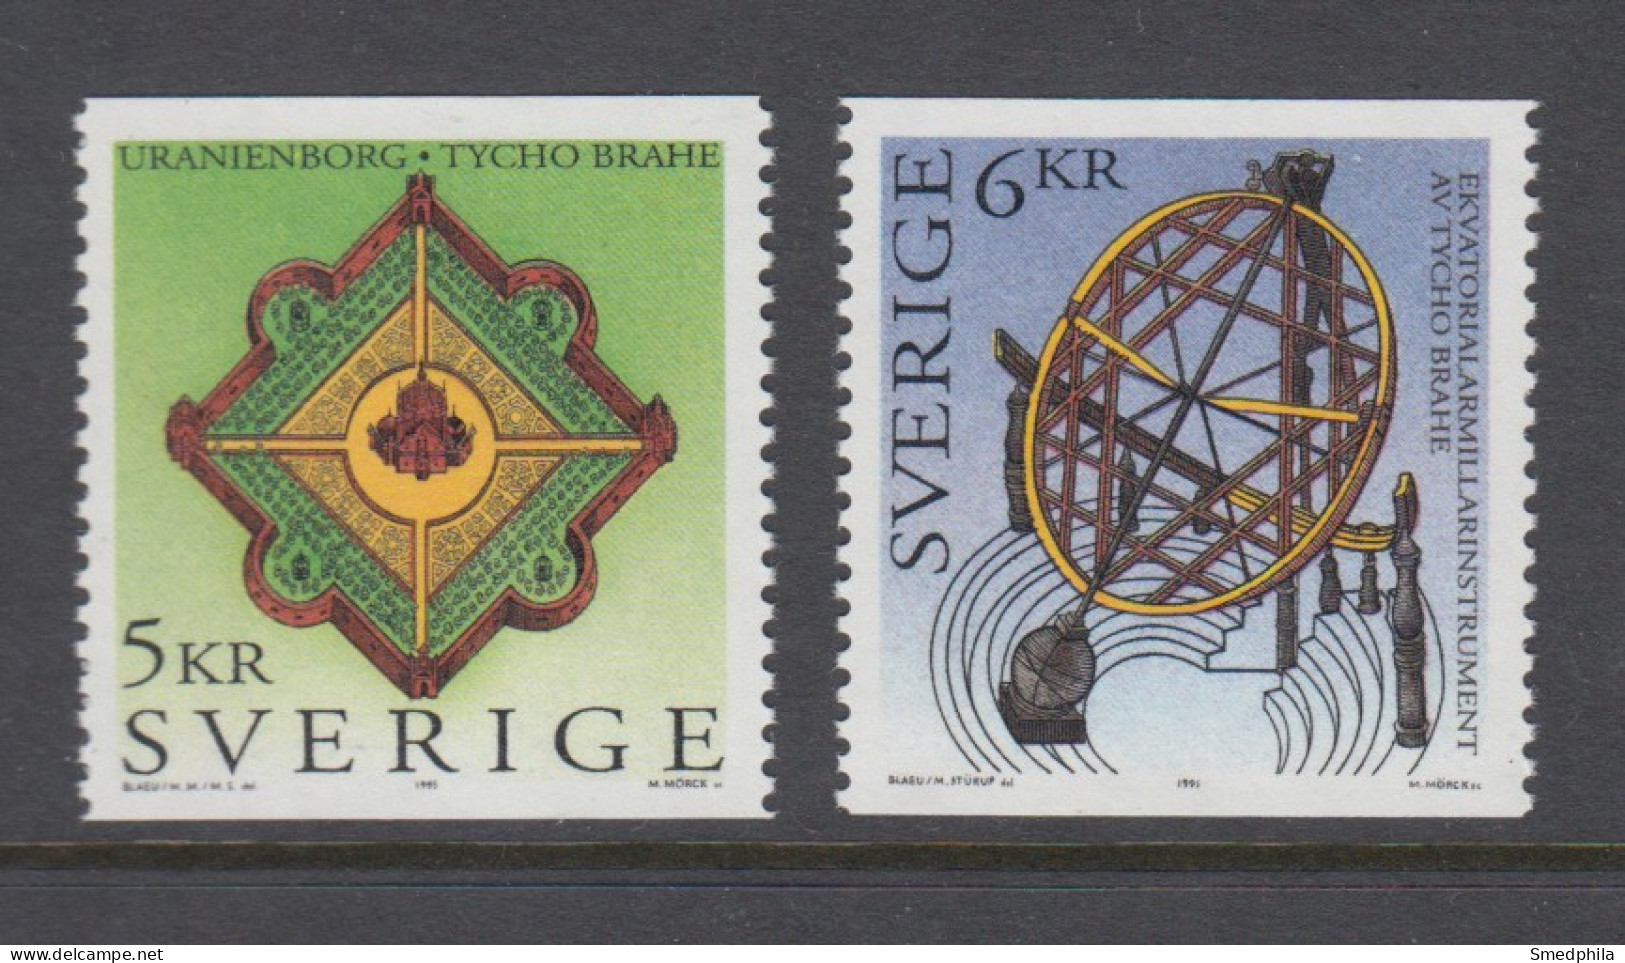 Sweden 1995 - Michel 1910-1911 MNH ** - Unused Stamps